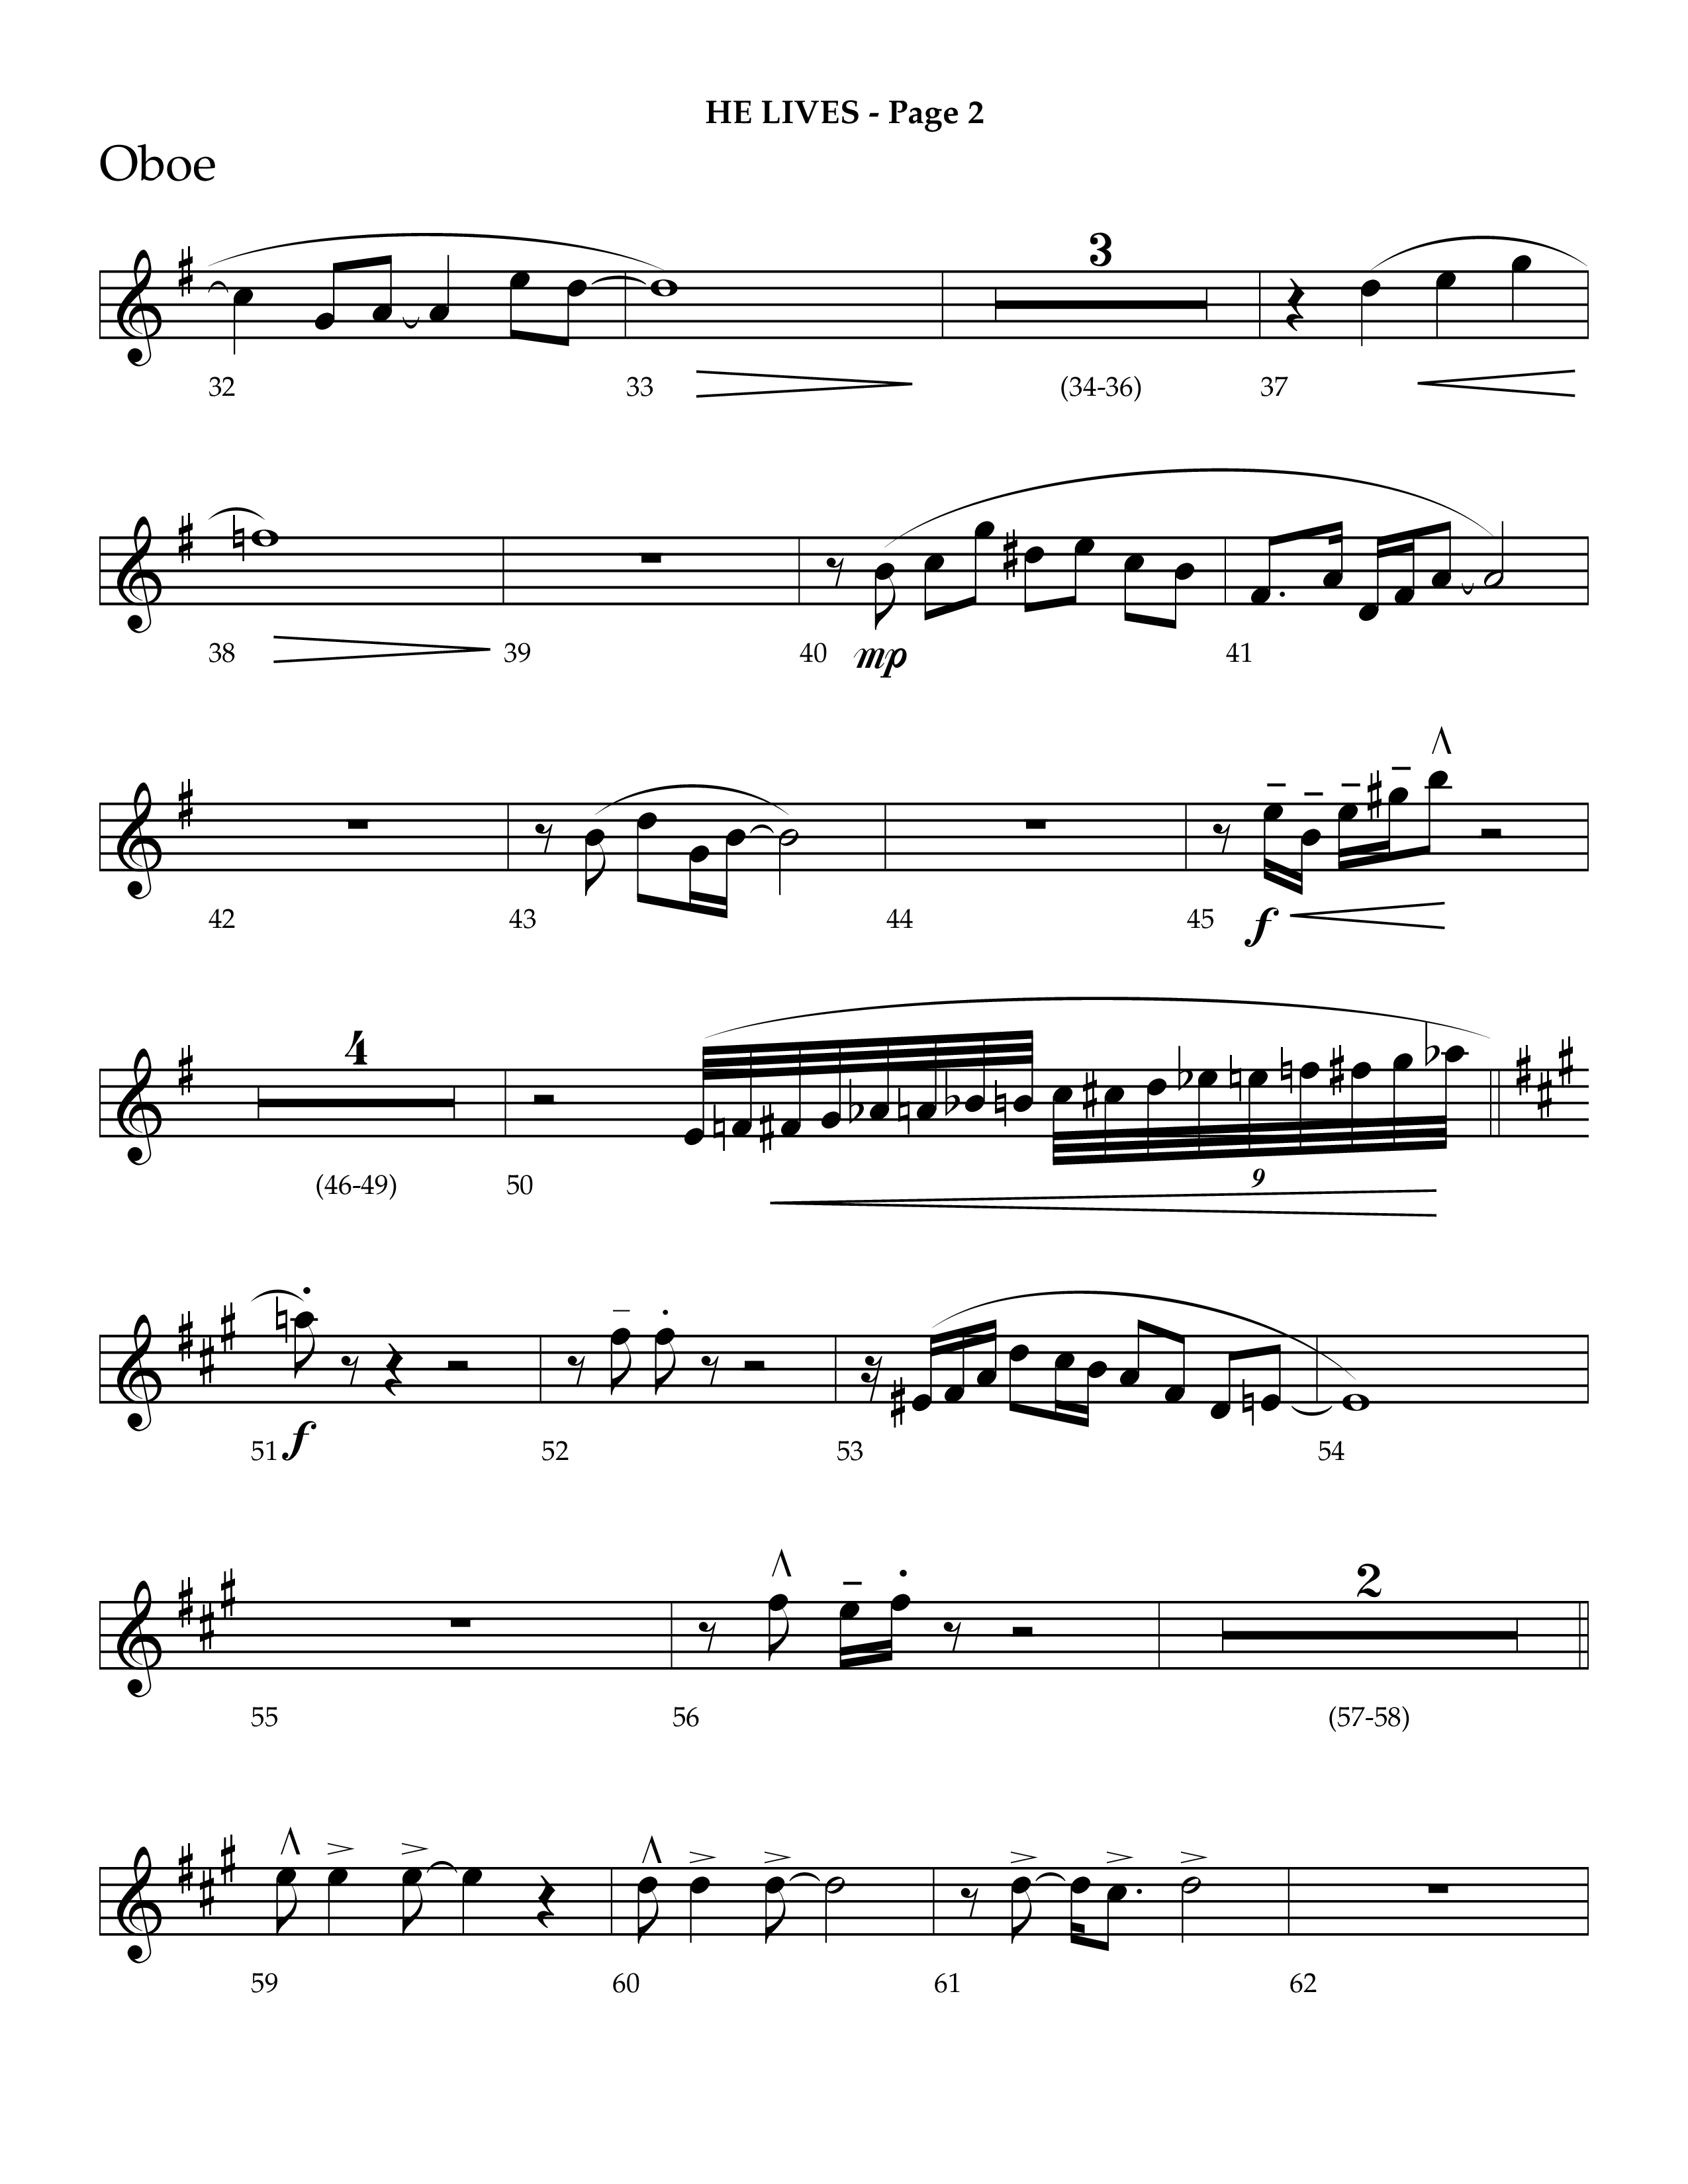 He Lives (Choral Anthem SATB) Oboe (Lifeway Choral / Arr. J. Daniel Smith)